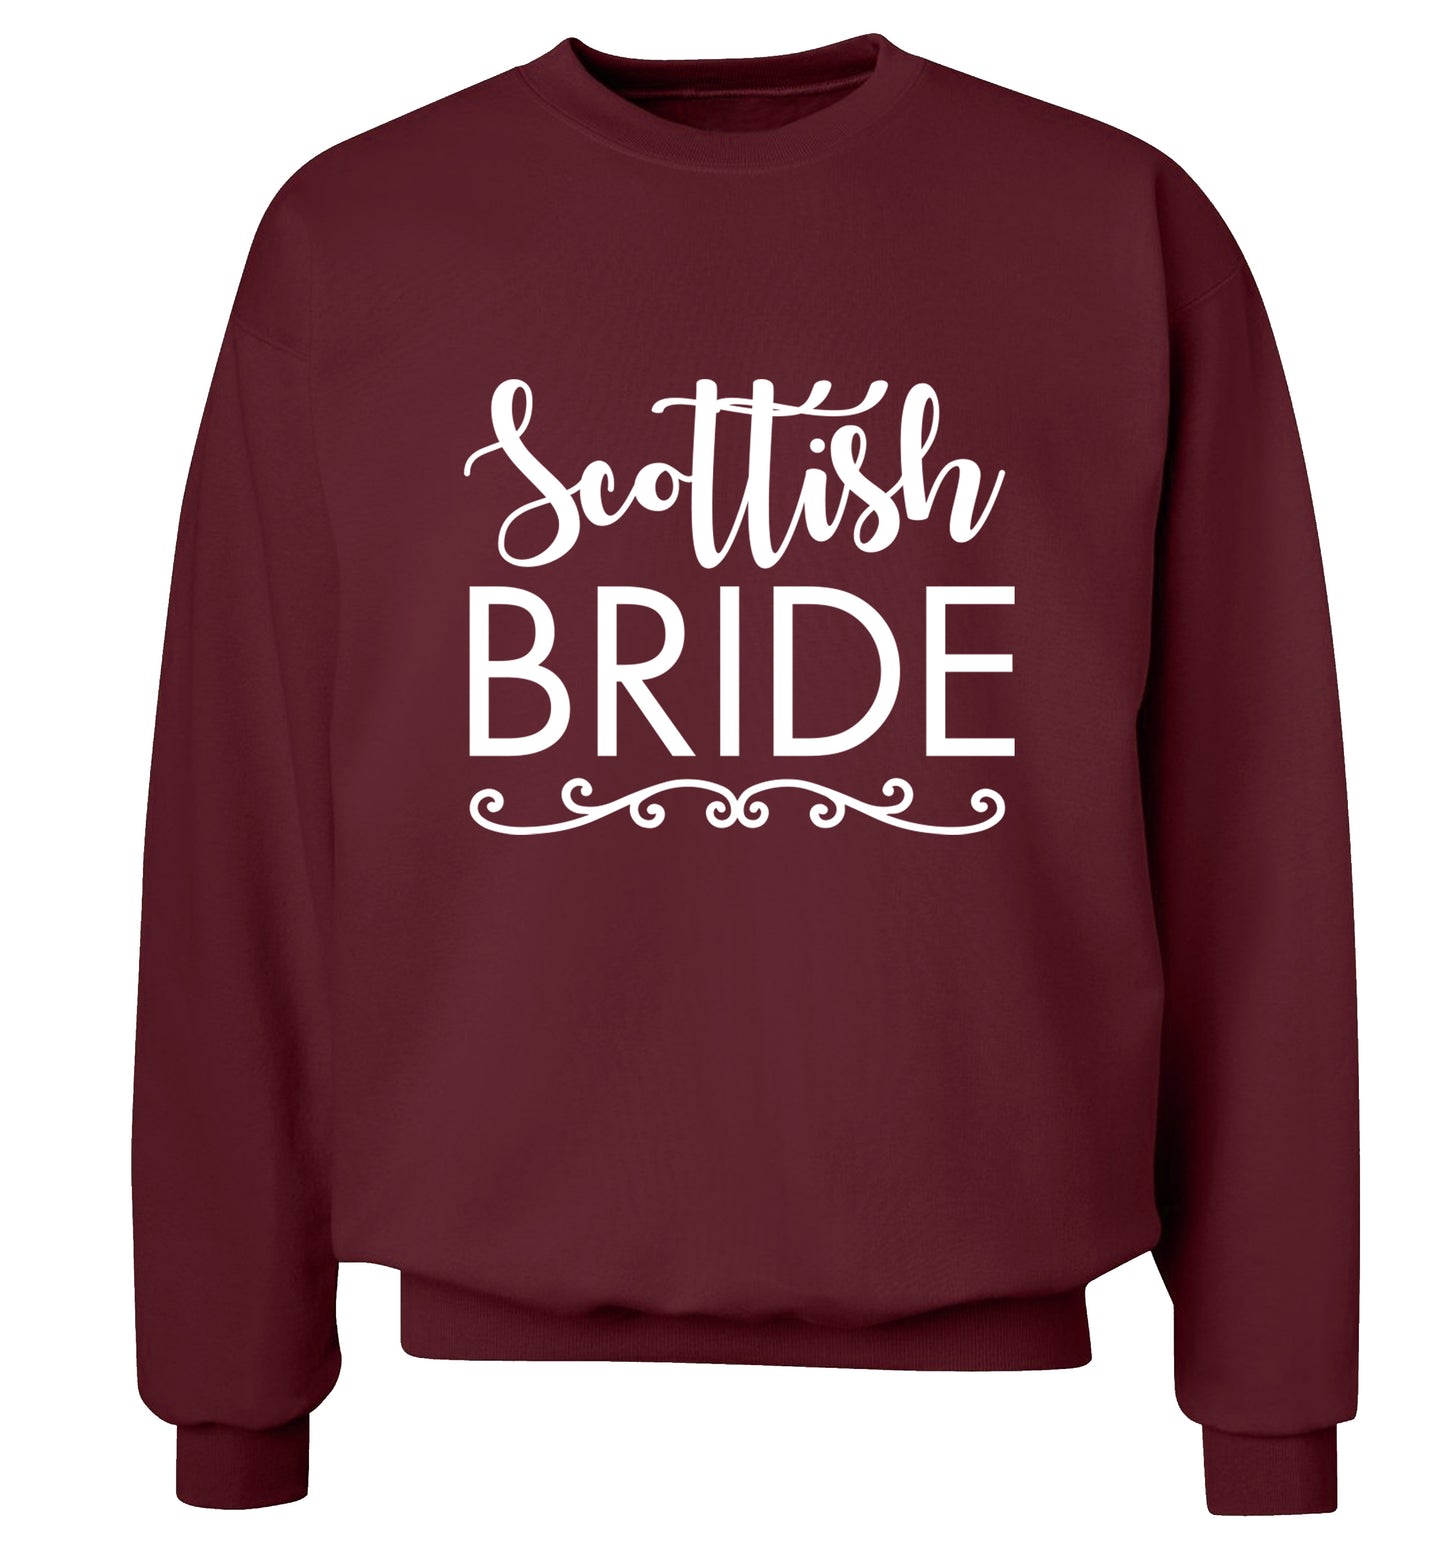 Scottish Bride Adult's unisex maroon Sweater 2XL